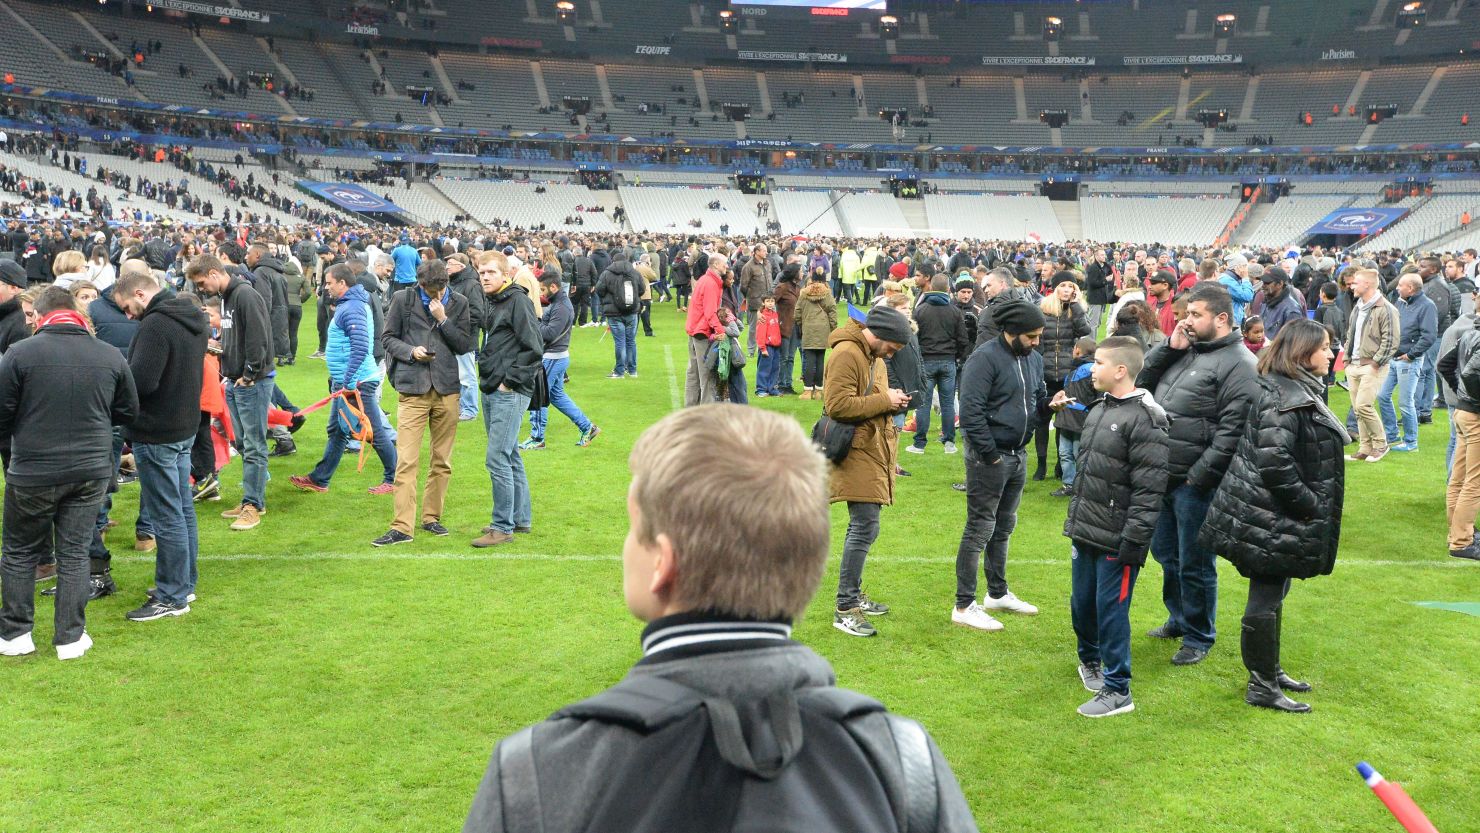 Spectators at the Stade de France stadium after the Paris terror attacks in November 2015.